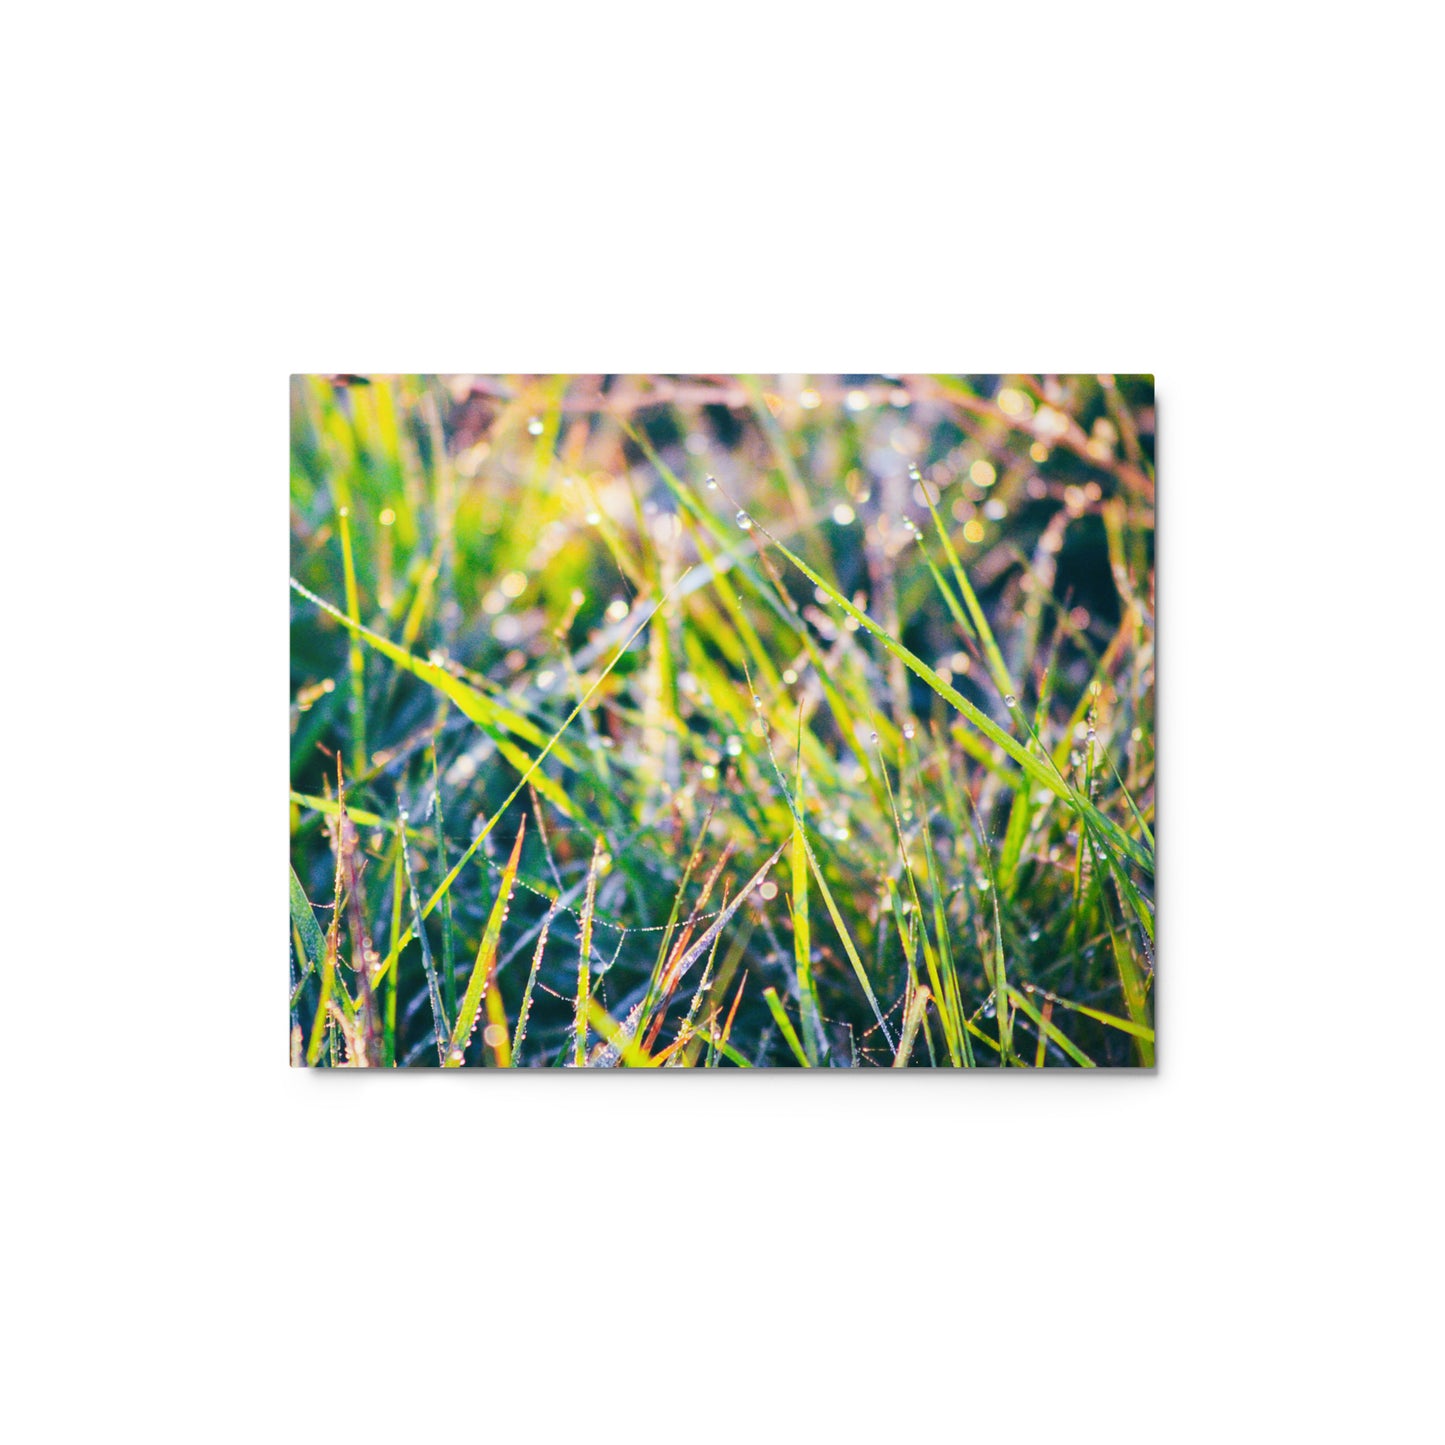 Grass-1 by C. Kovalick